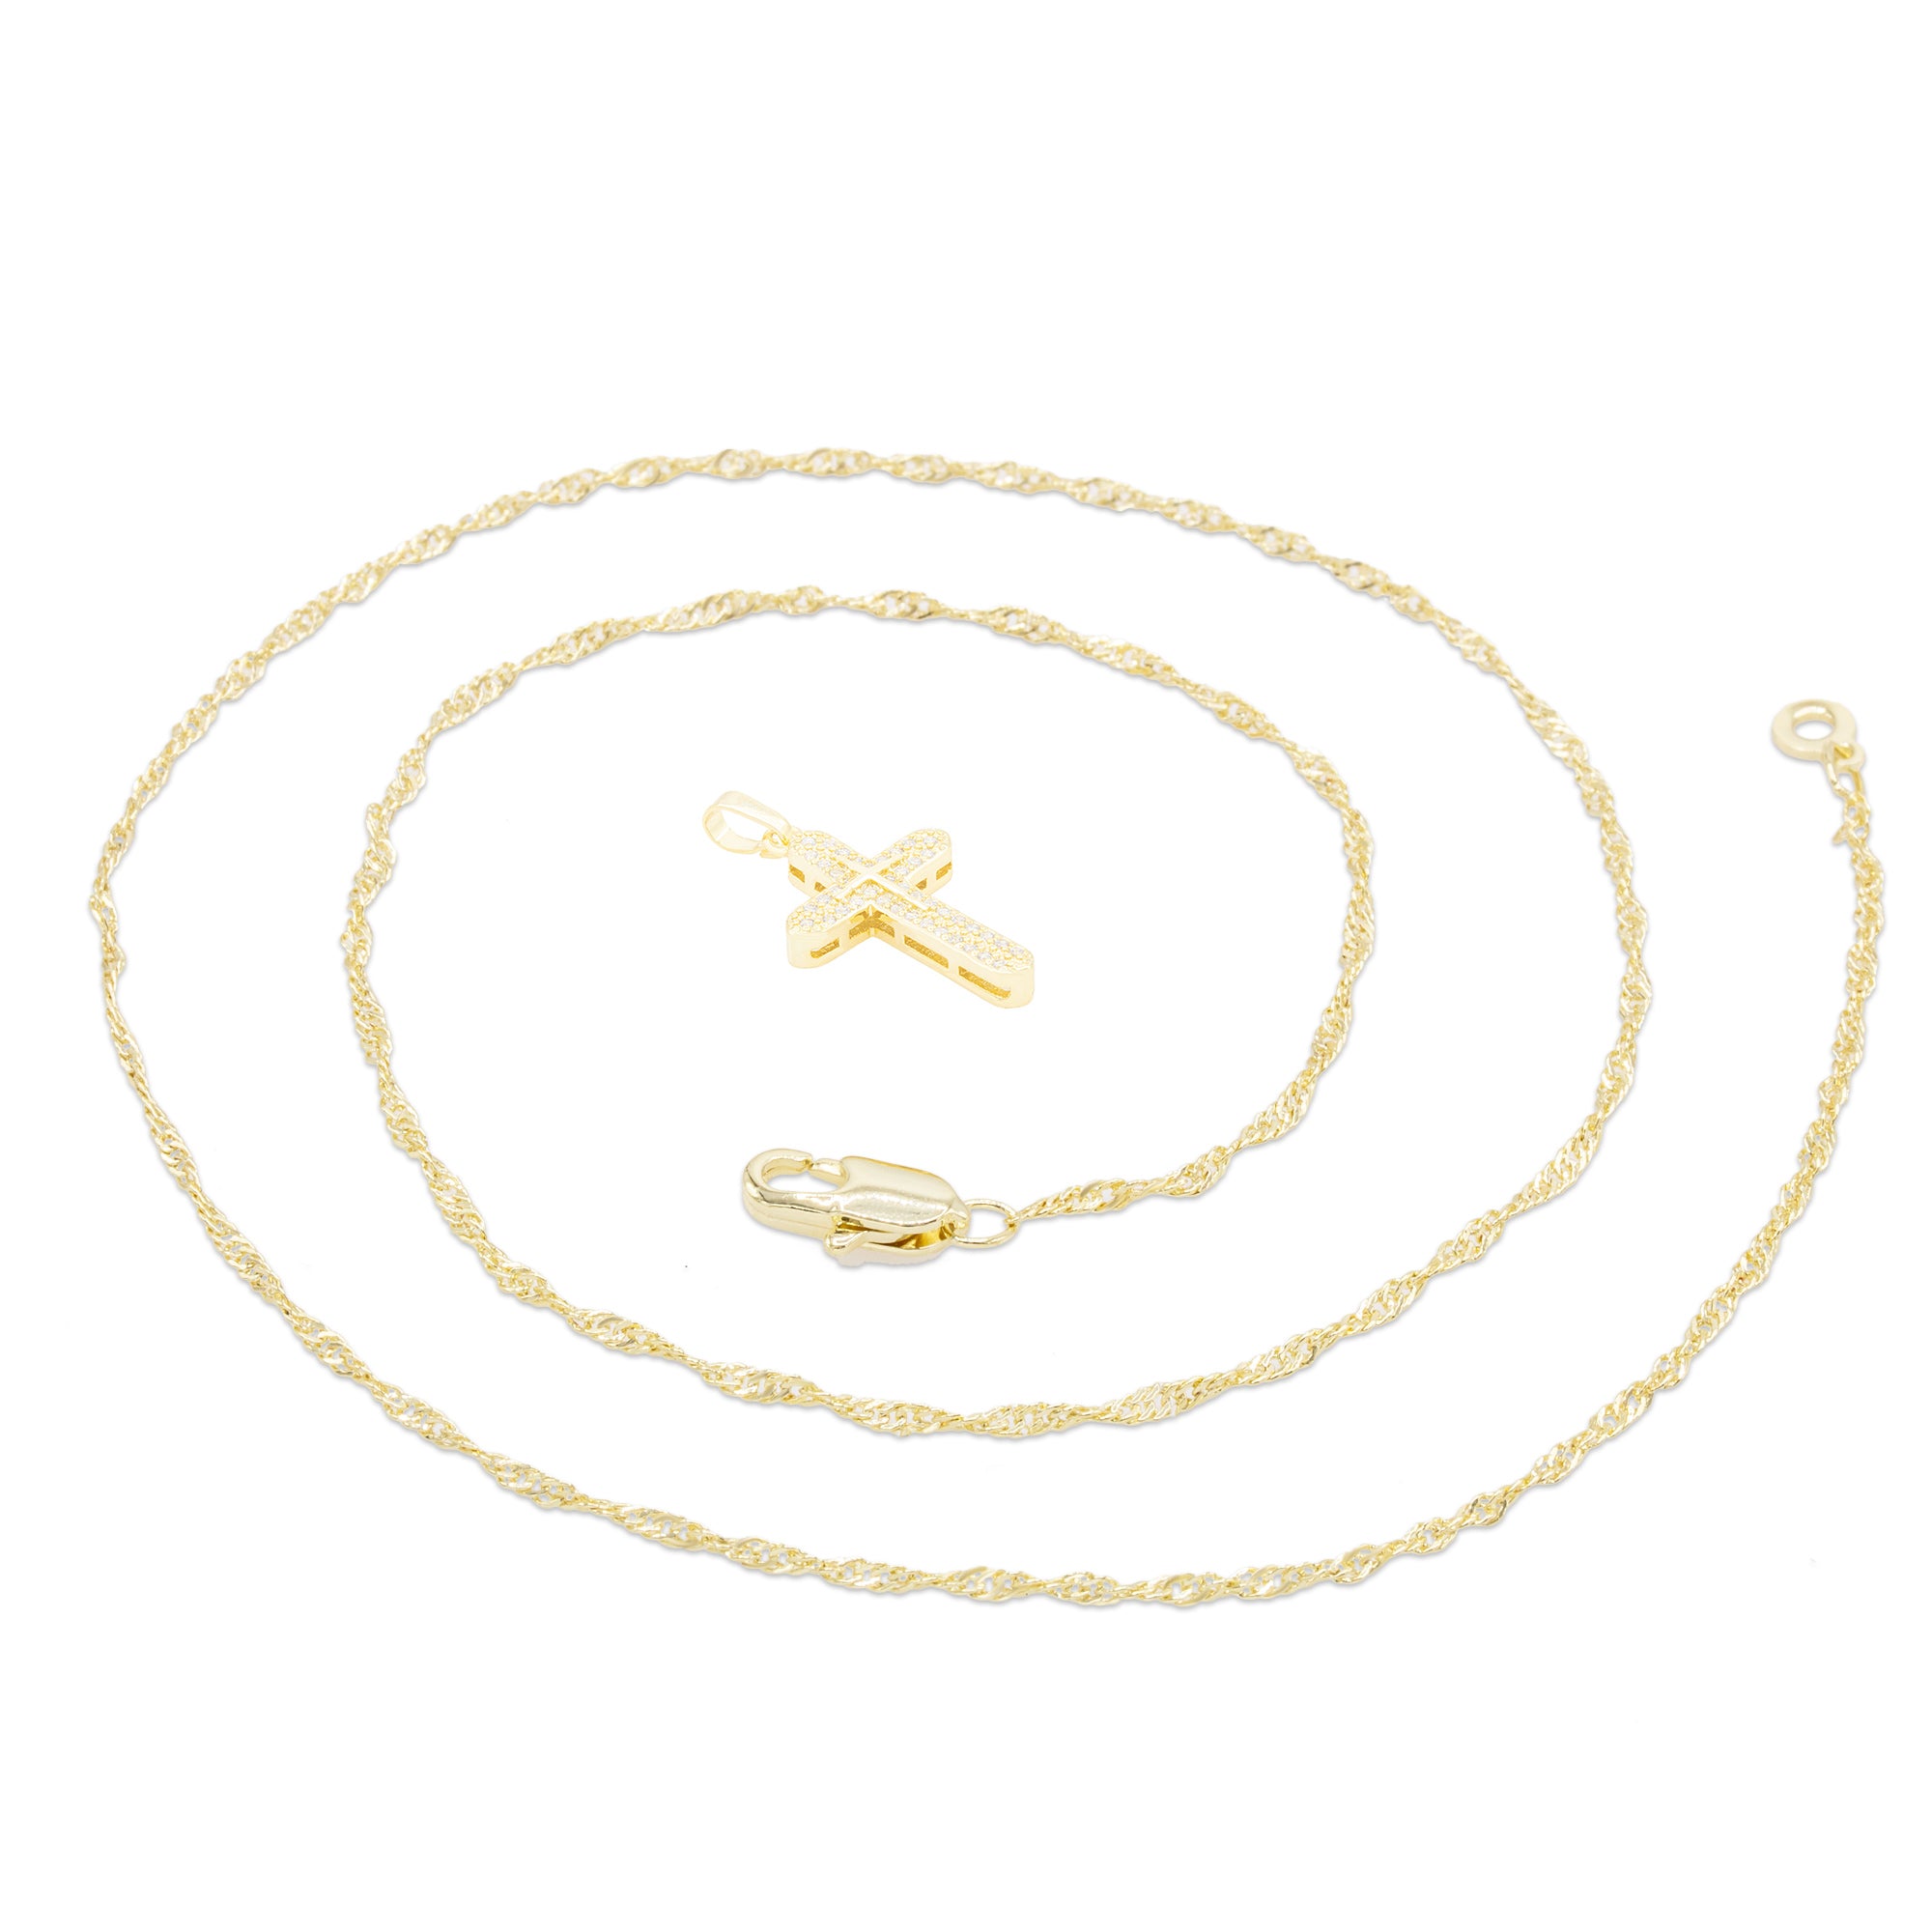 Women Cross Pendant Necklace Set For Jewelry